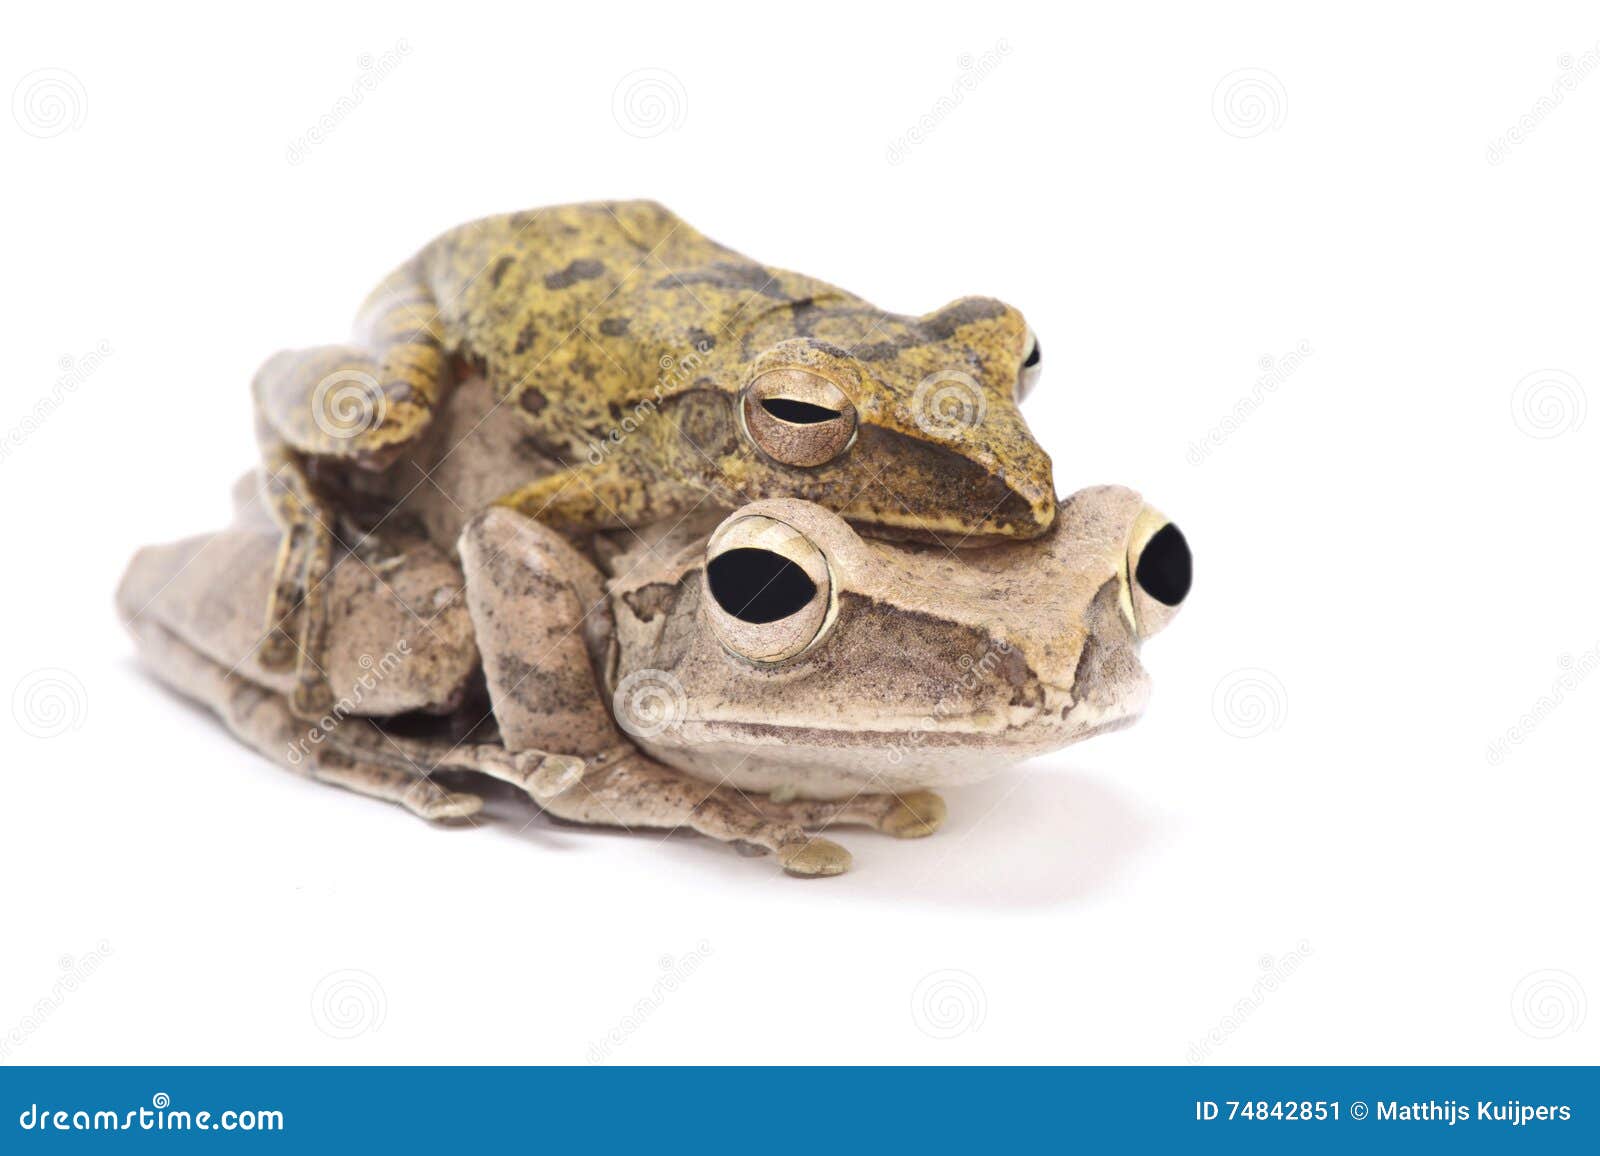 golden gliding frog (polypedates leucomystax ) pair